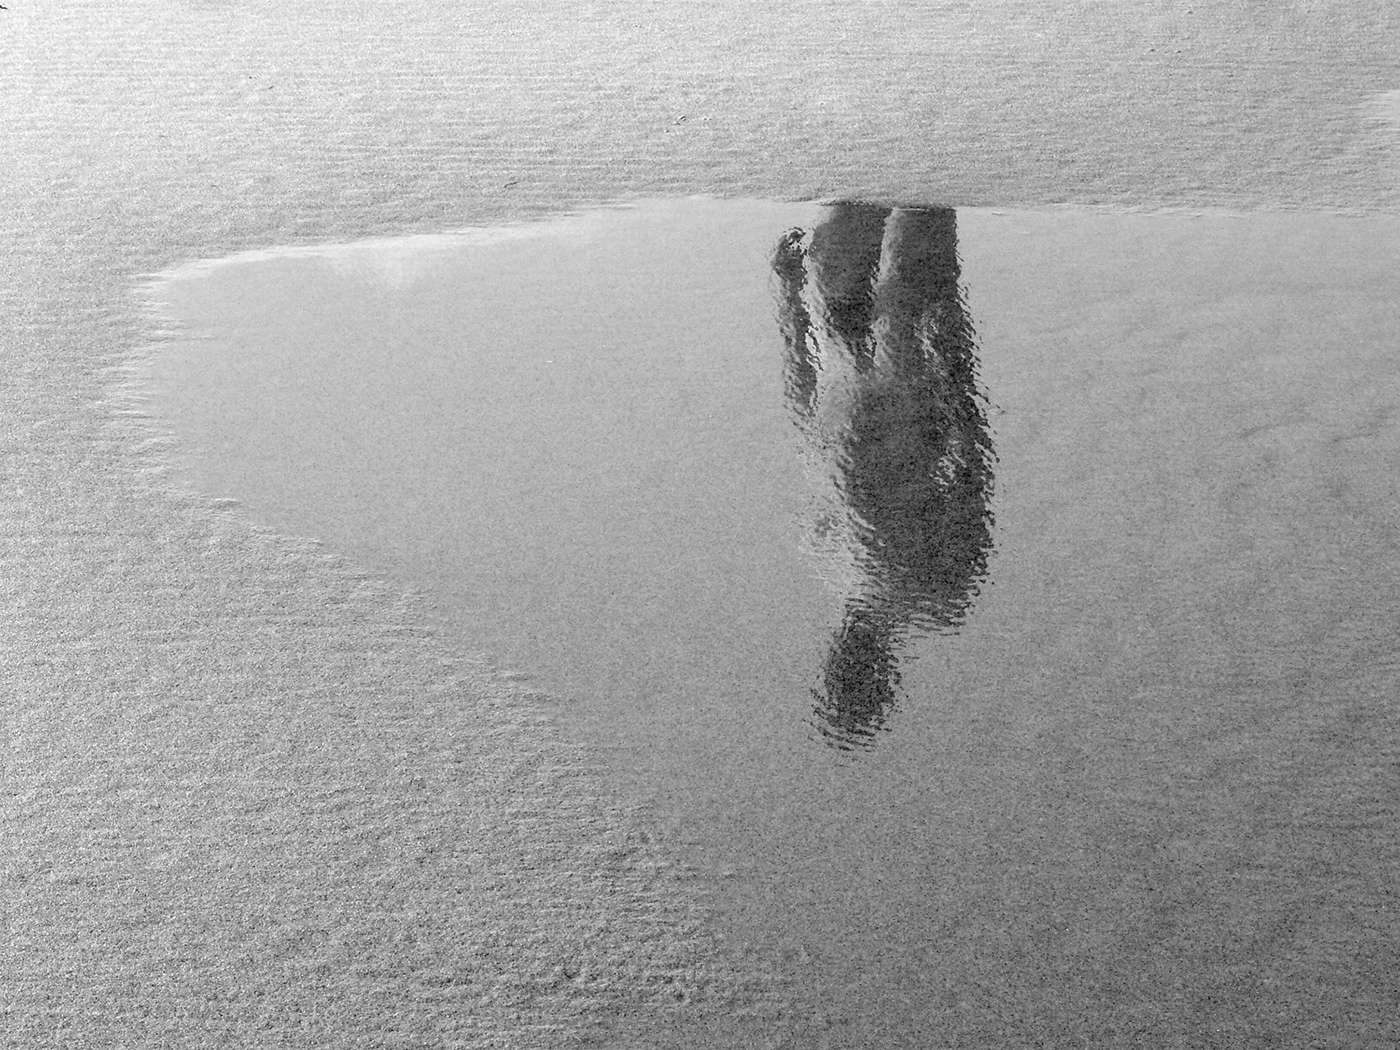 plage nu homme art Masculin france mer soleil noir et blanc